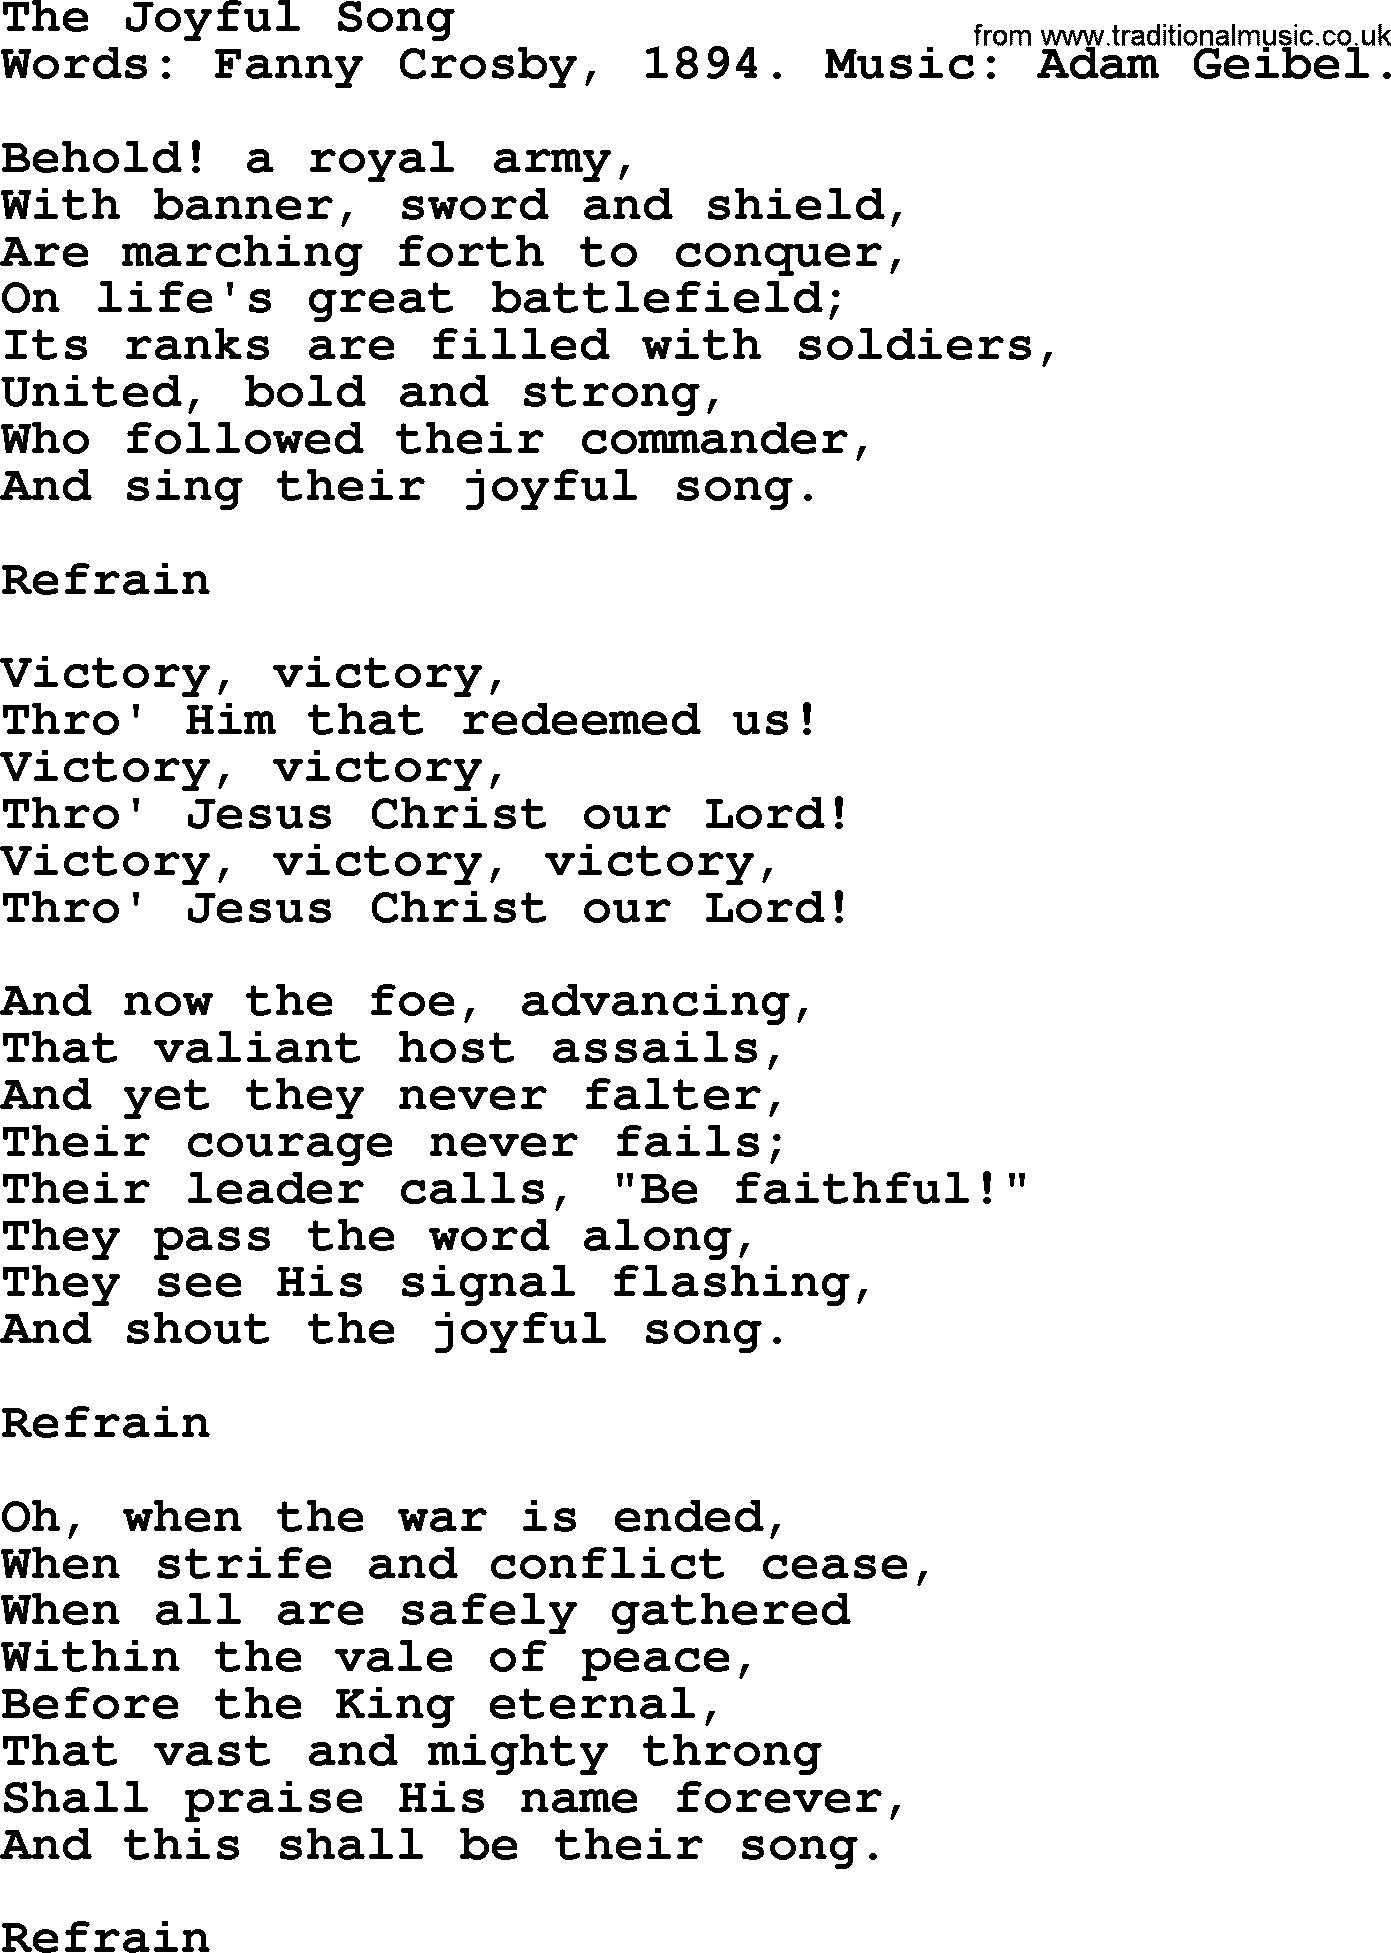 Fanny Crosby song: The Joyful Song, lyrics